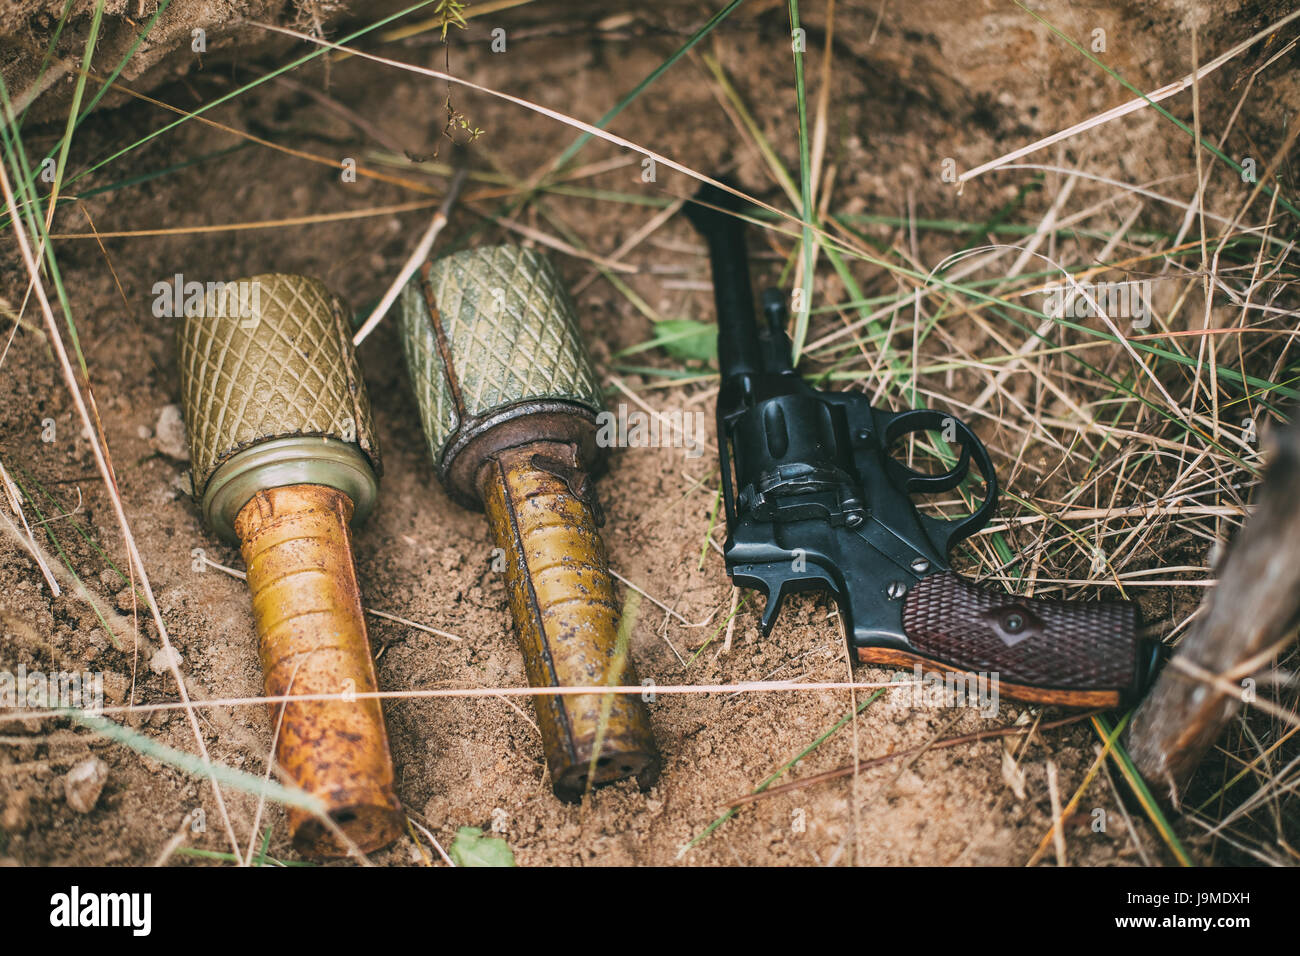 Soviet Red Army Russian Soldiers Military Ammunition Of World War II On Ground. Two Grenades And Nagant Handgun Gun. Stock Photo